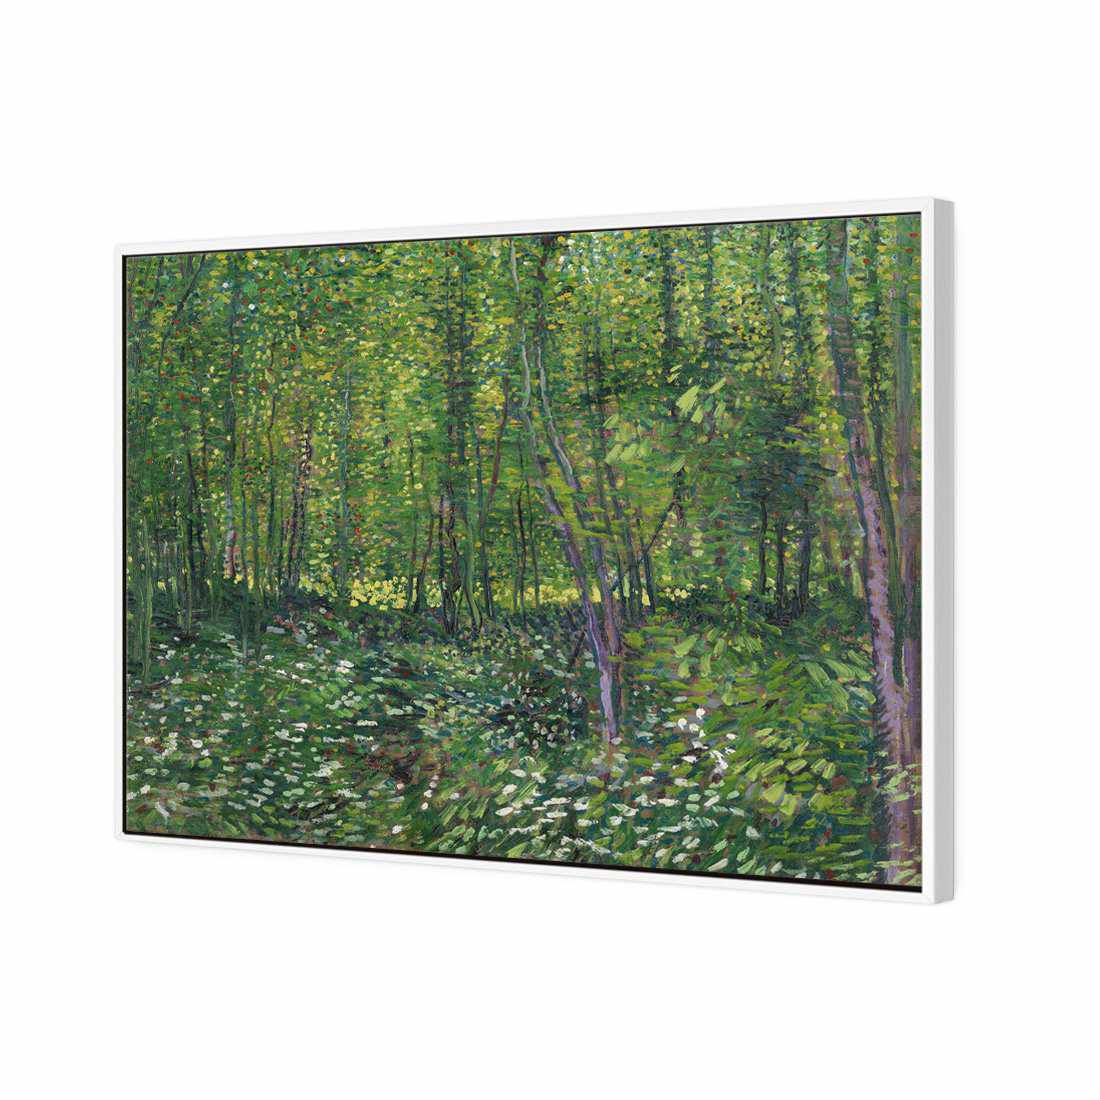 Trees And Undergrowth - Van Gogh Canvas Art-Canvas-Wall Art Designs-45x30cm-Canvas - White Frame-Wall Art Designs